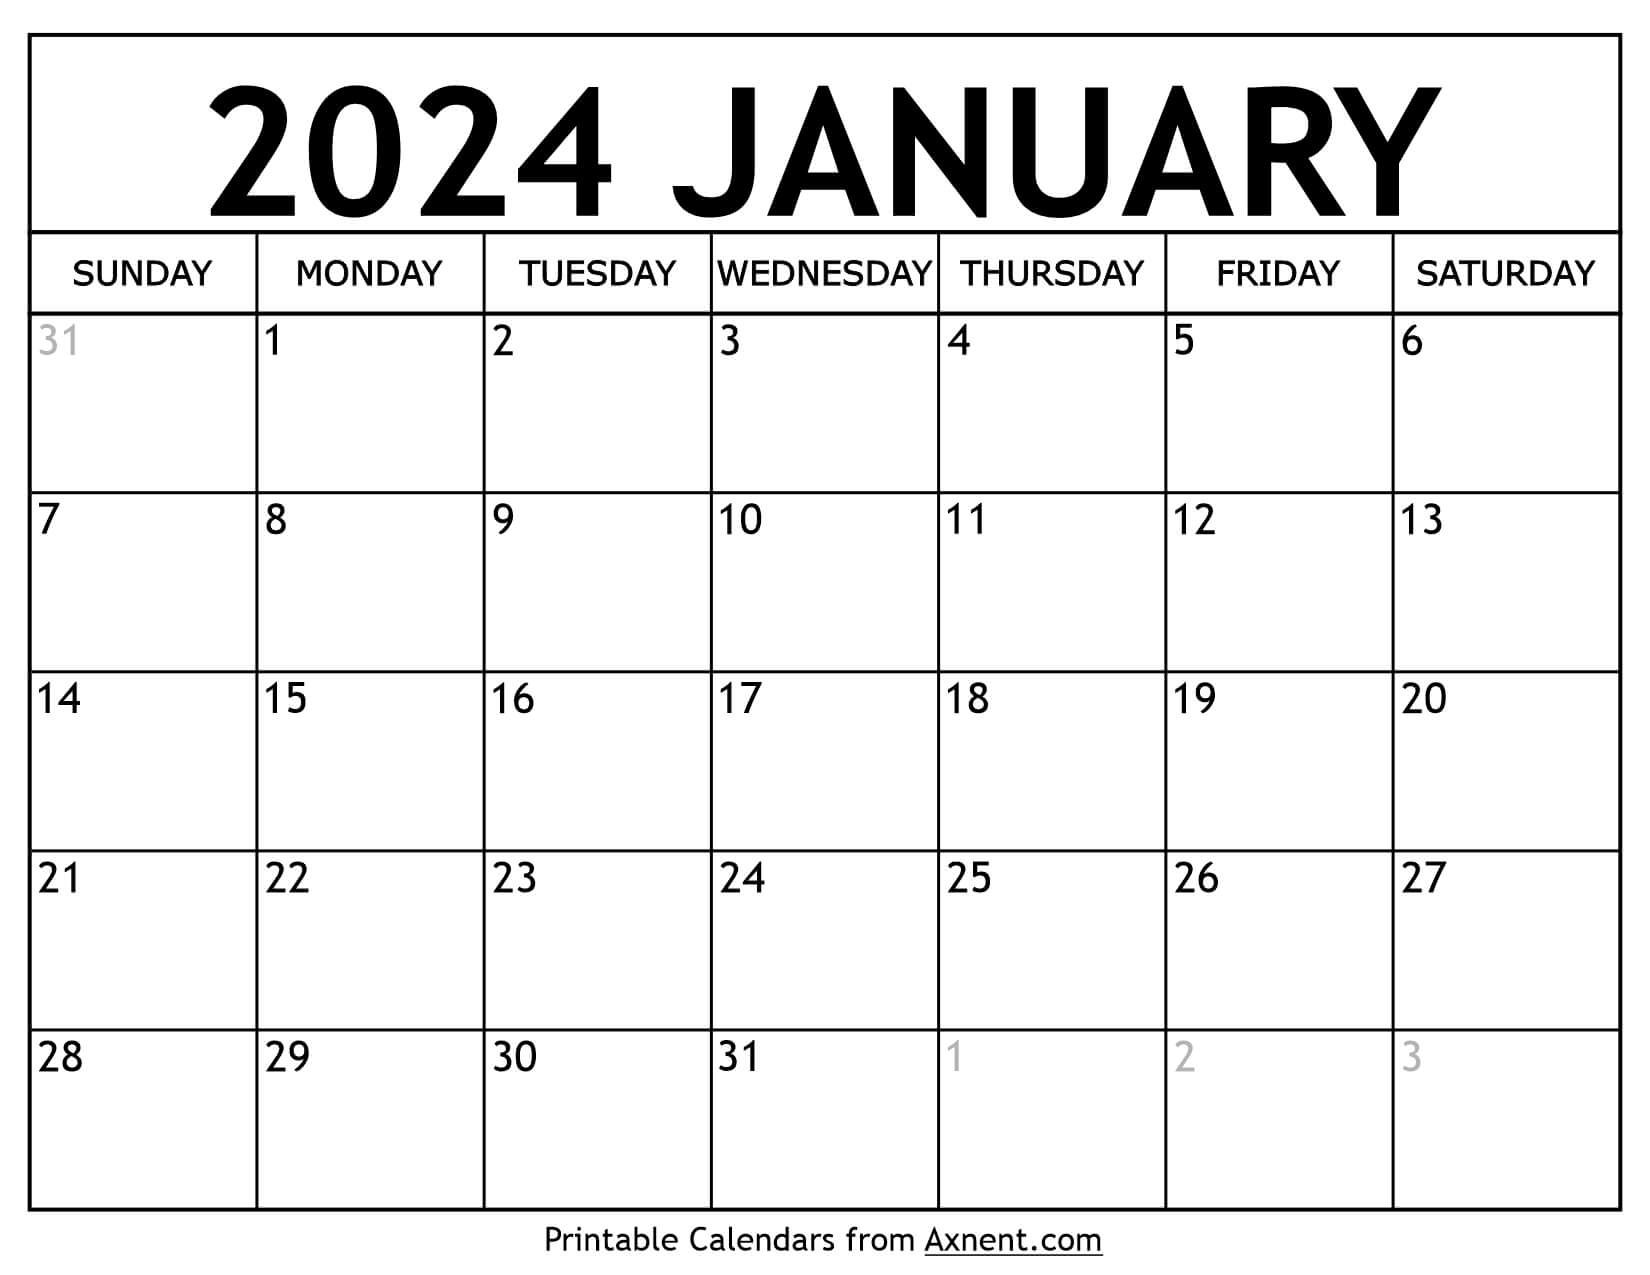 Printable January 2024 Calendar Template - Print Now for January 2024 Free Calendar Printable